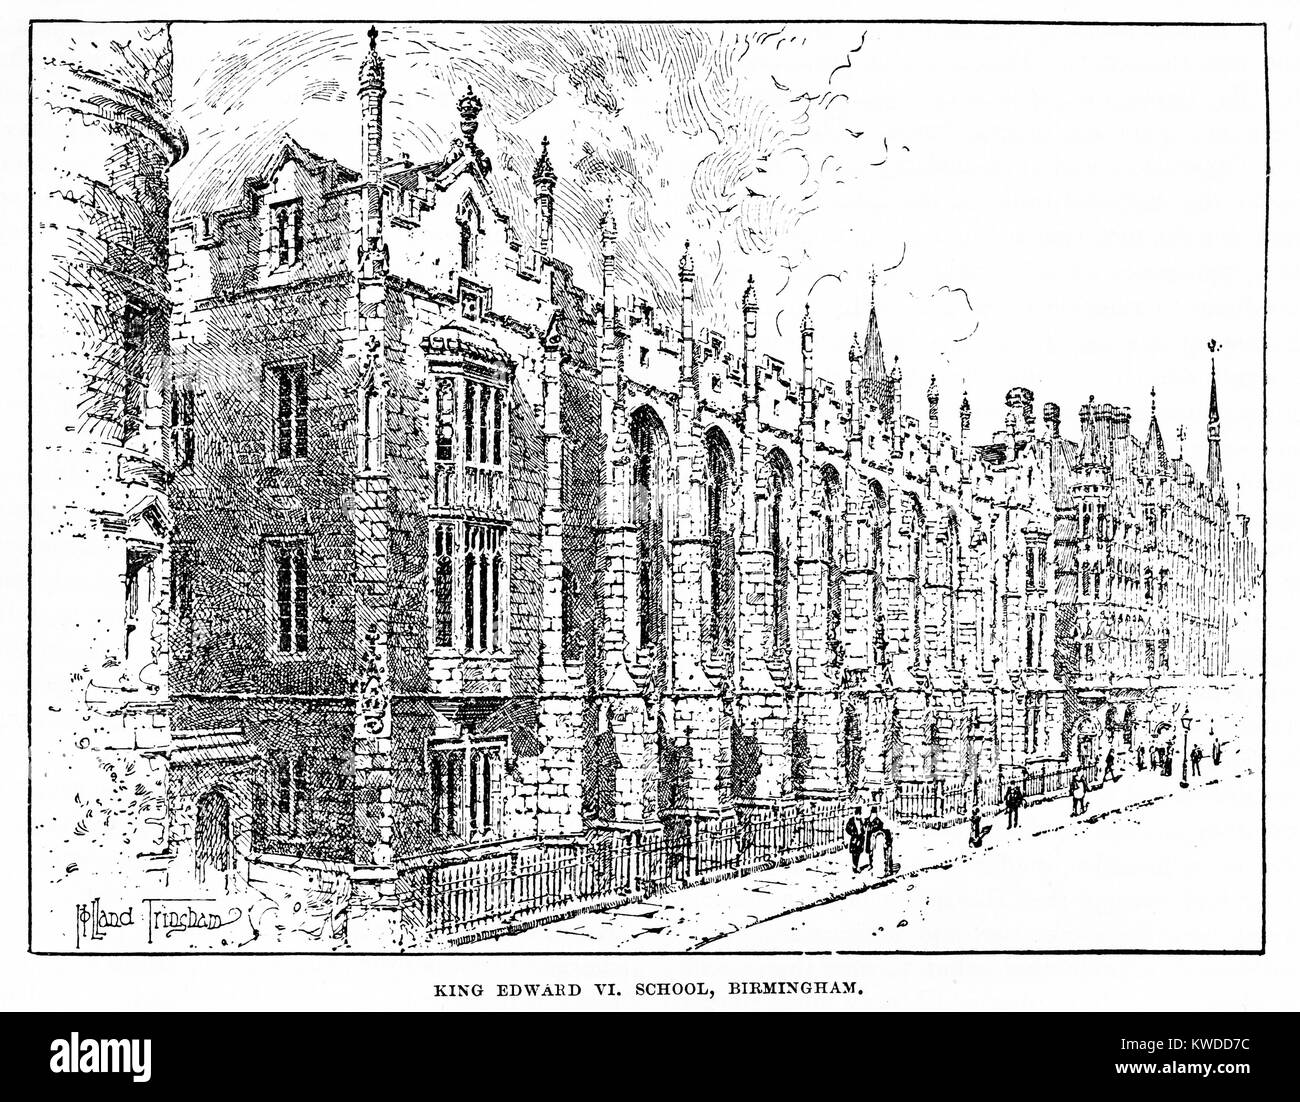 King Edward VI School, Birmingham. 19th century black and white engraving Stock Photo